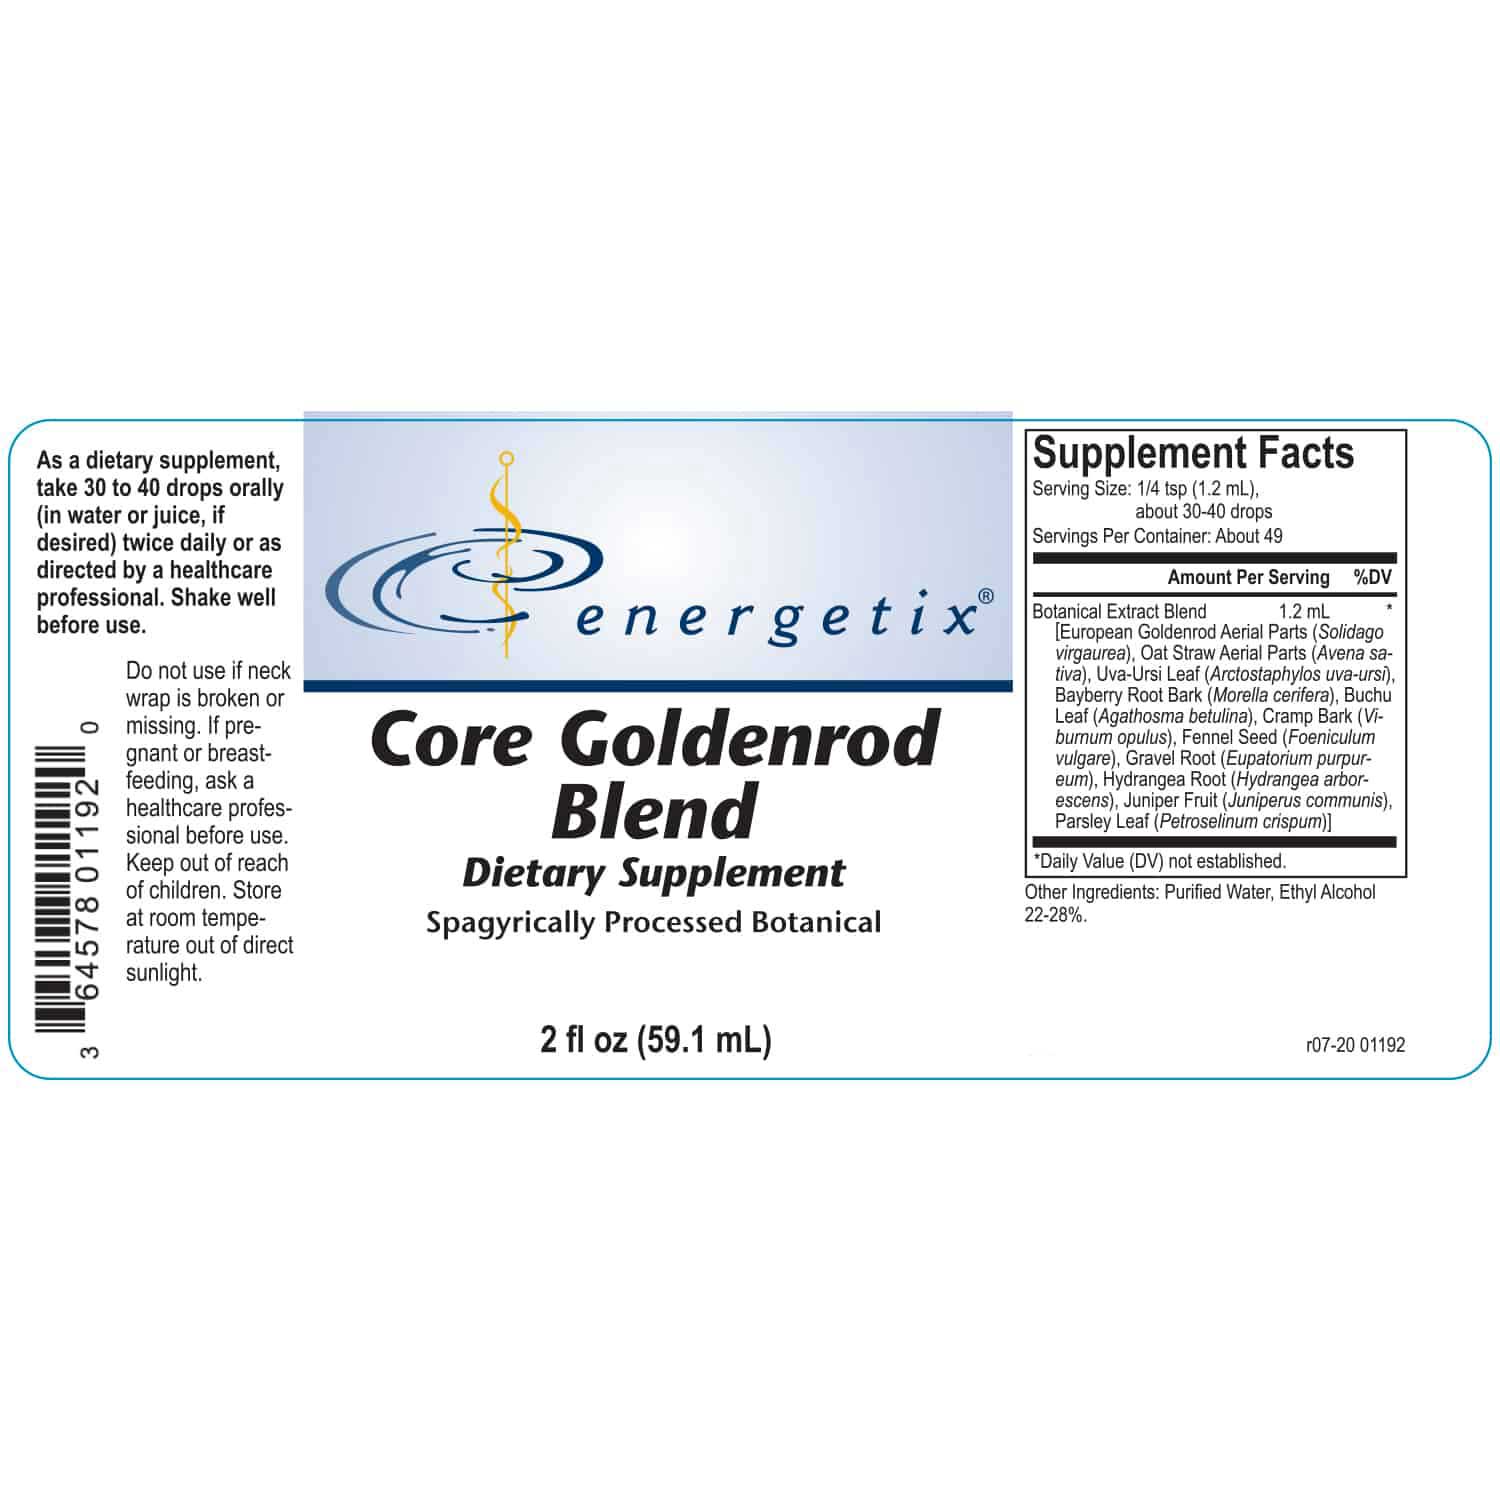 Energetix Core Goldenrod Blend Label